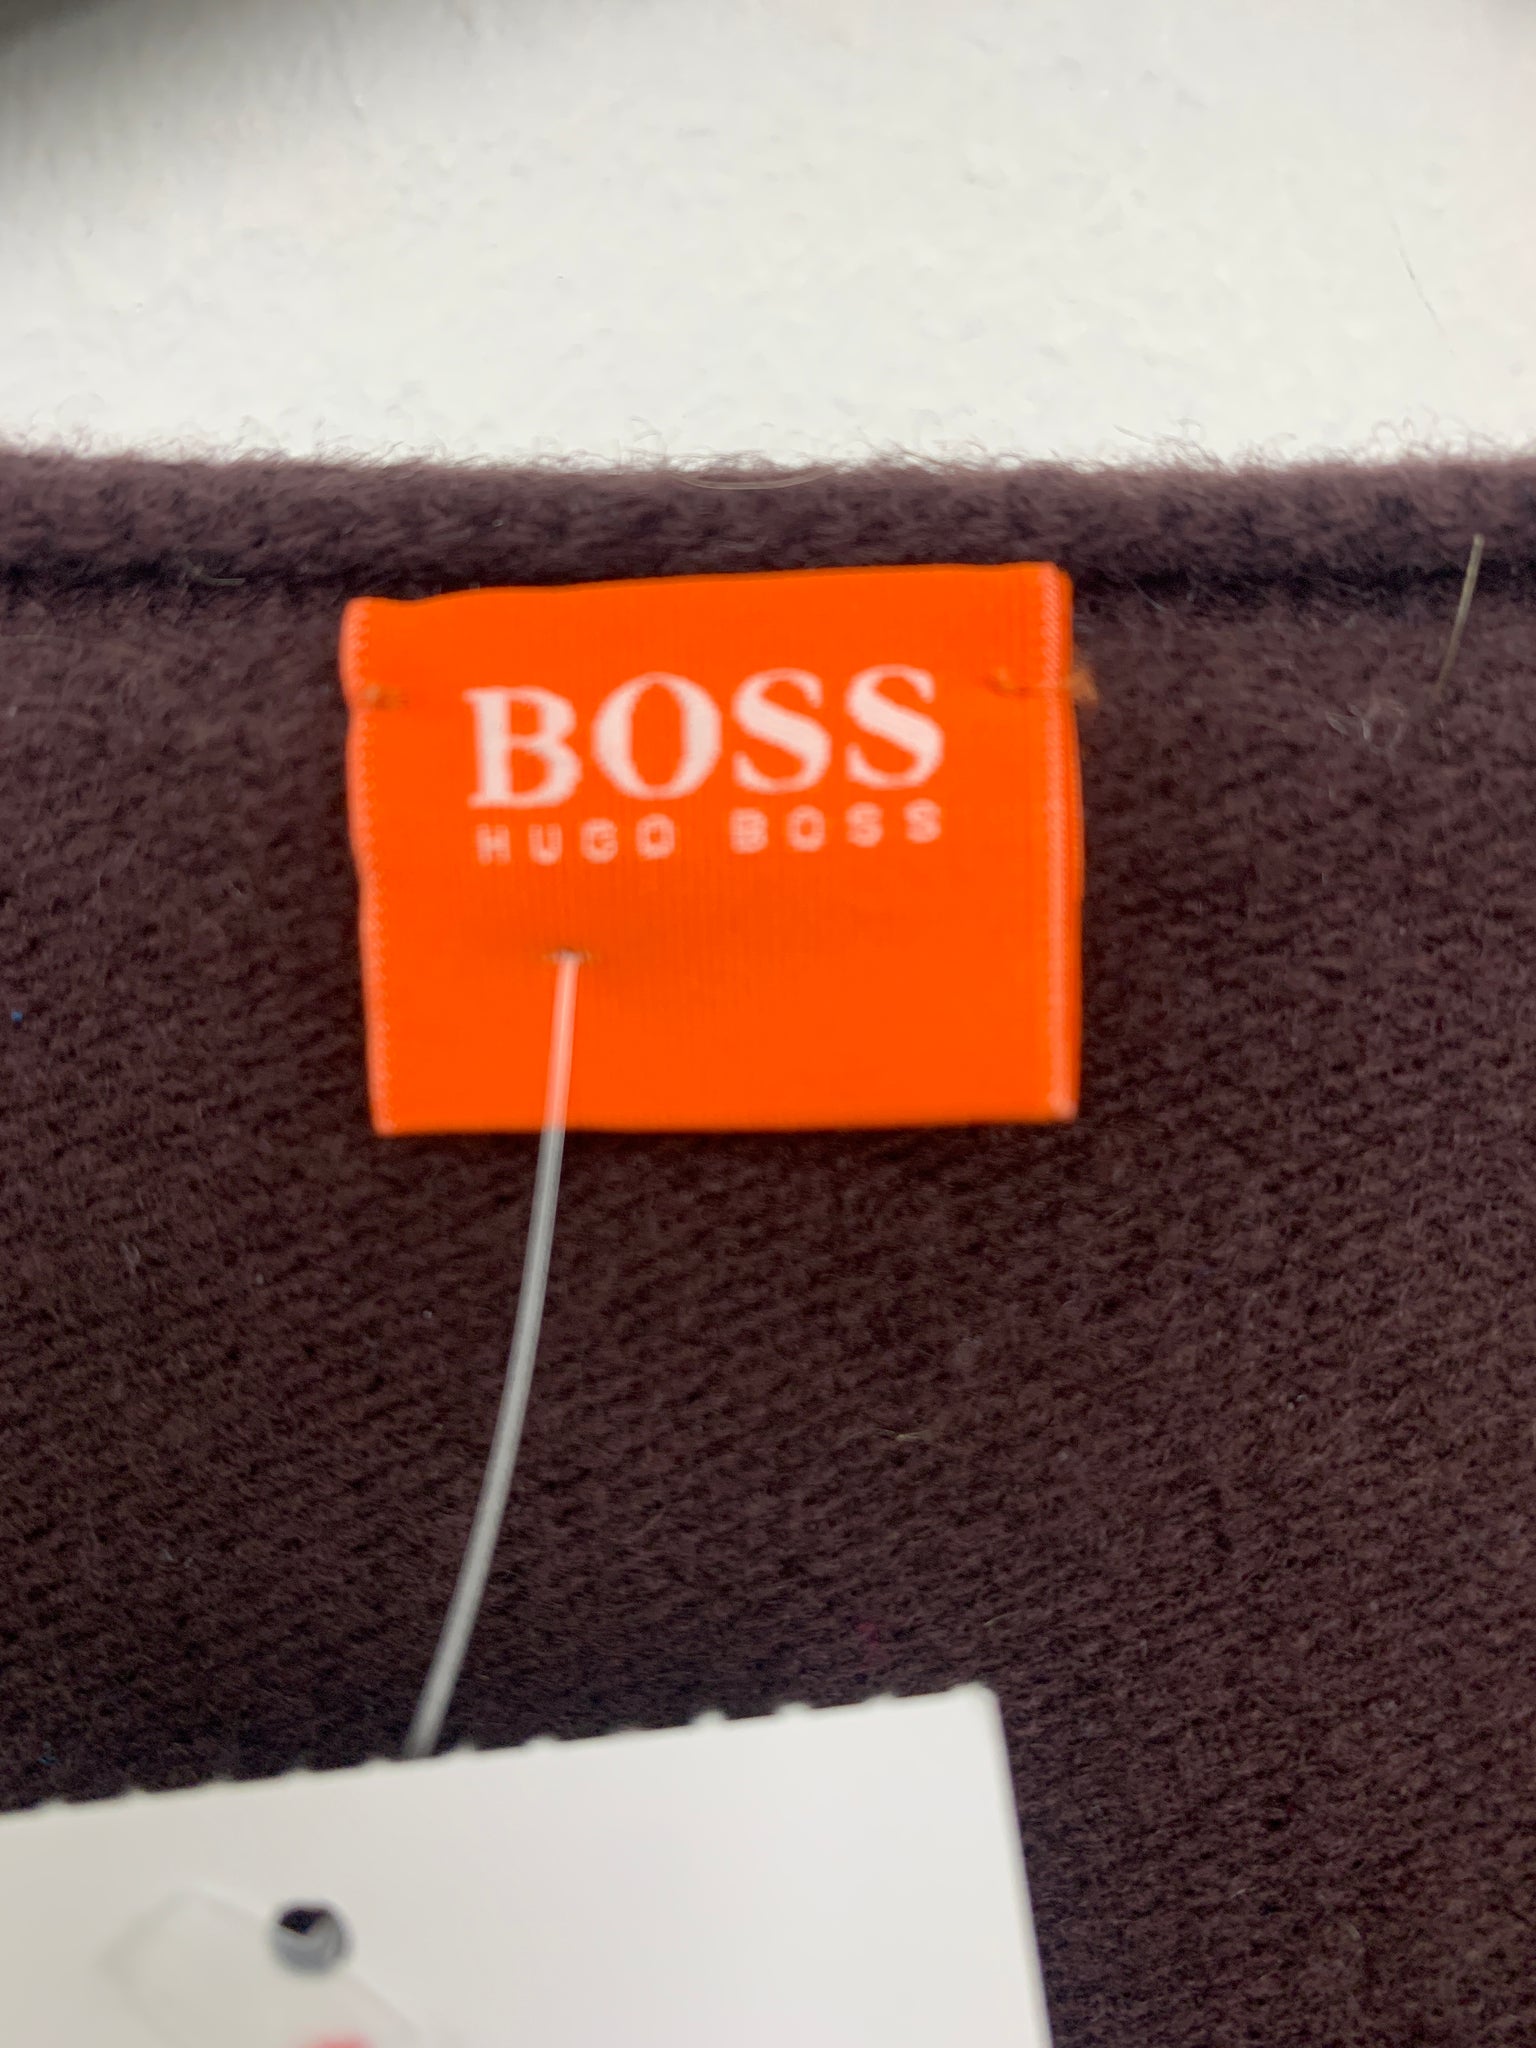 Hugo Boss sweater